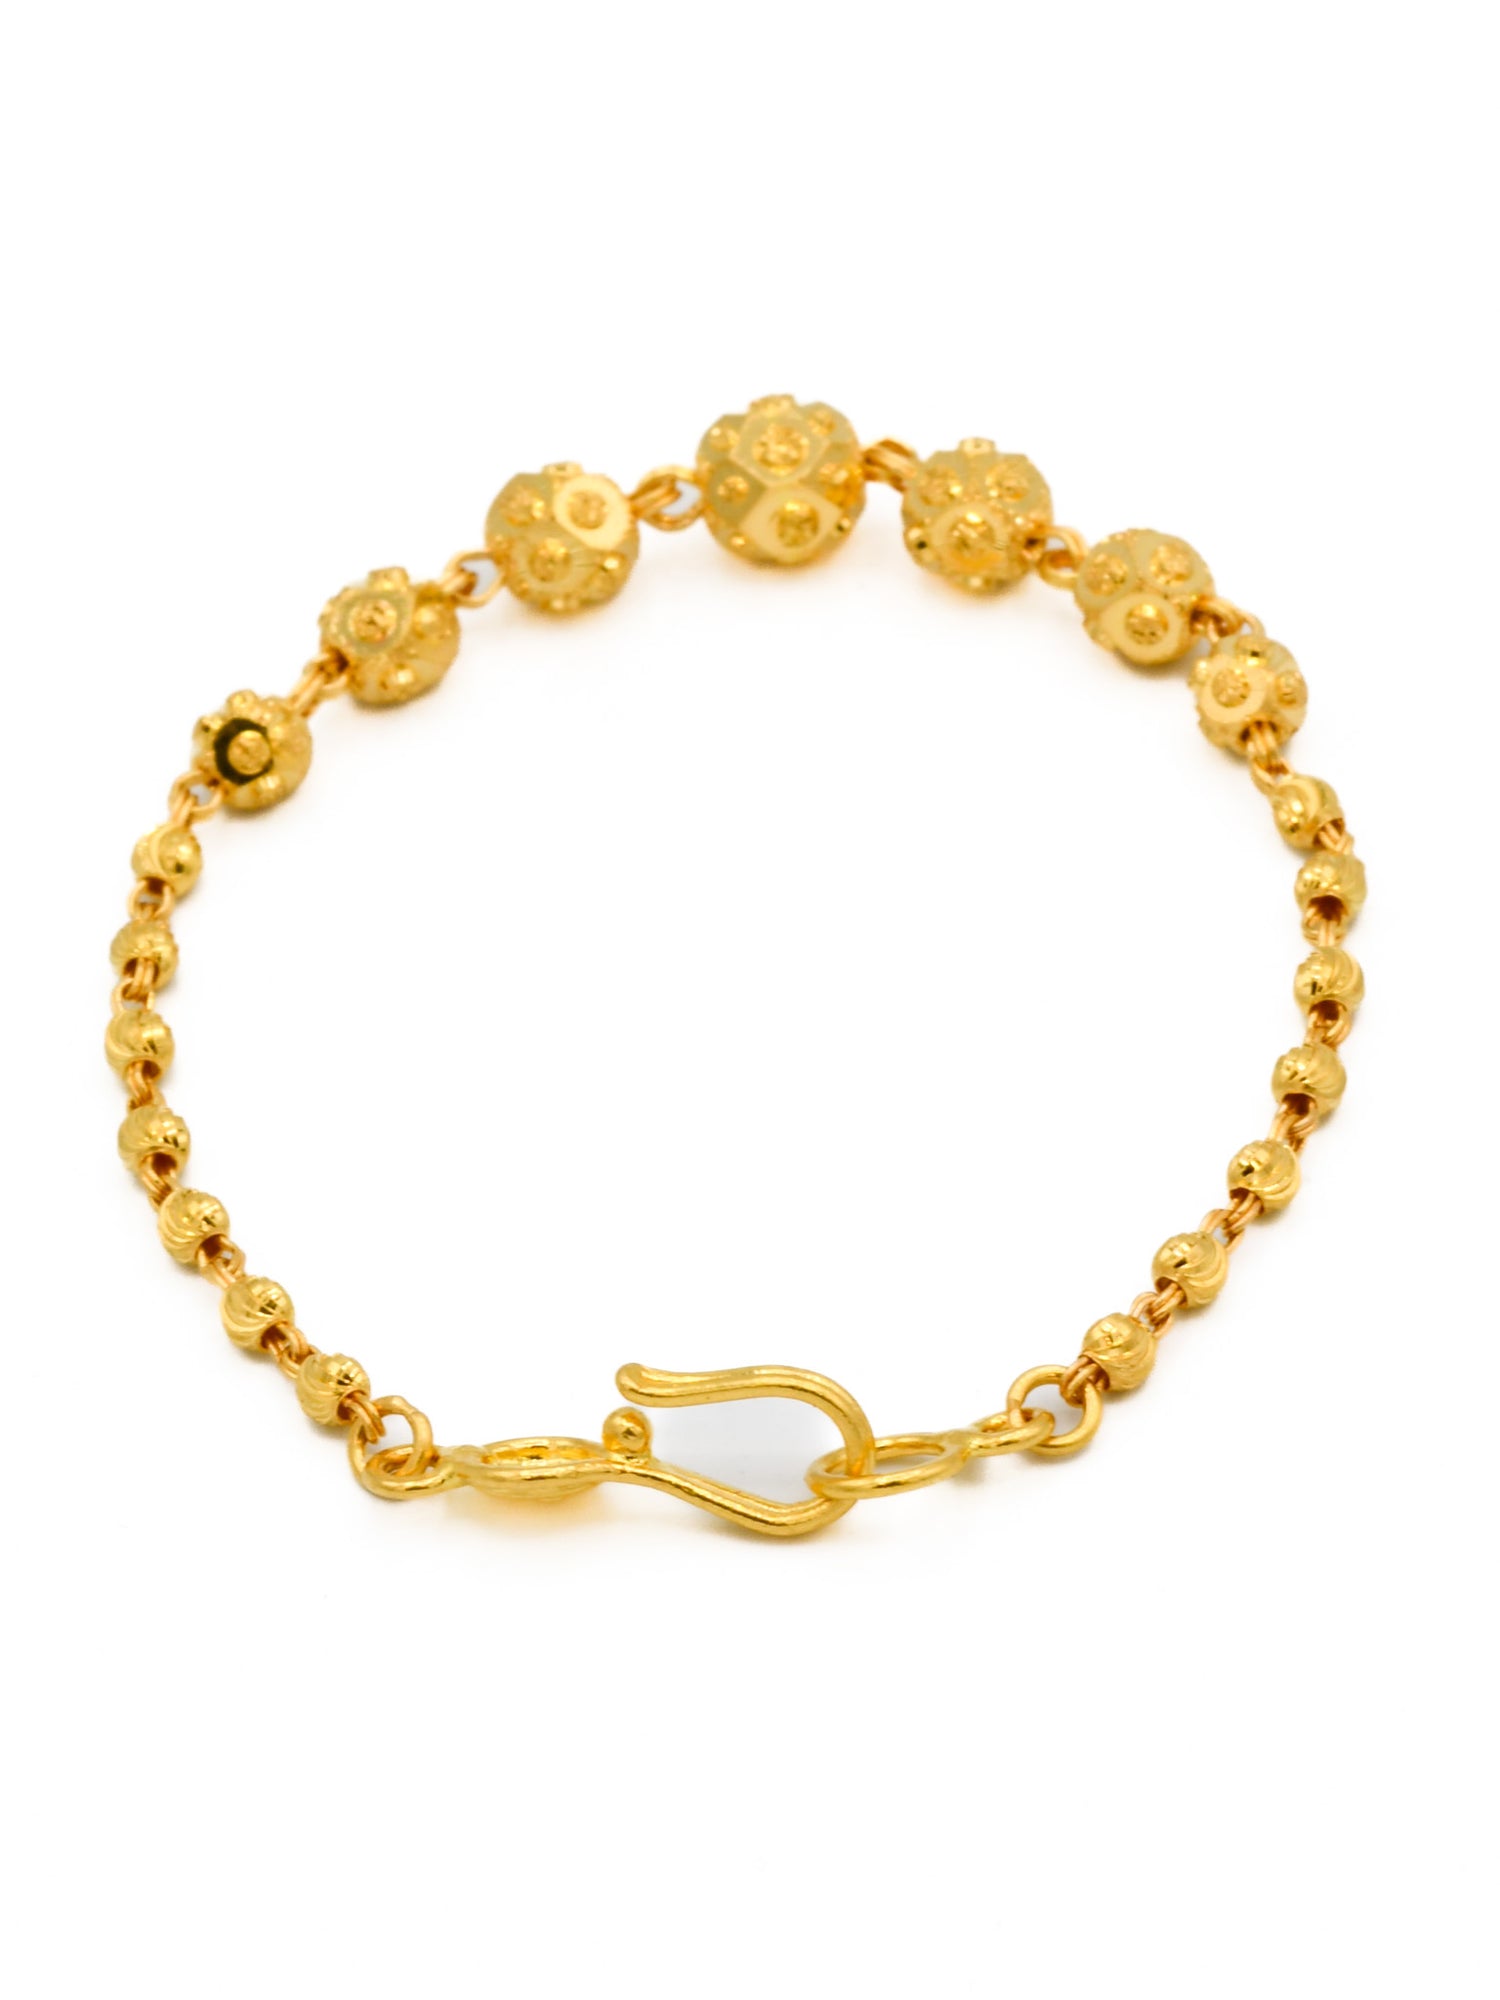 22ct Gold Ball Baby Bracelet - Roop Darshan